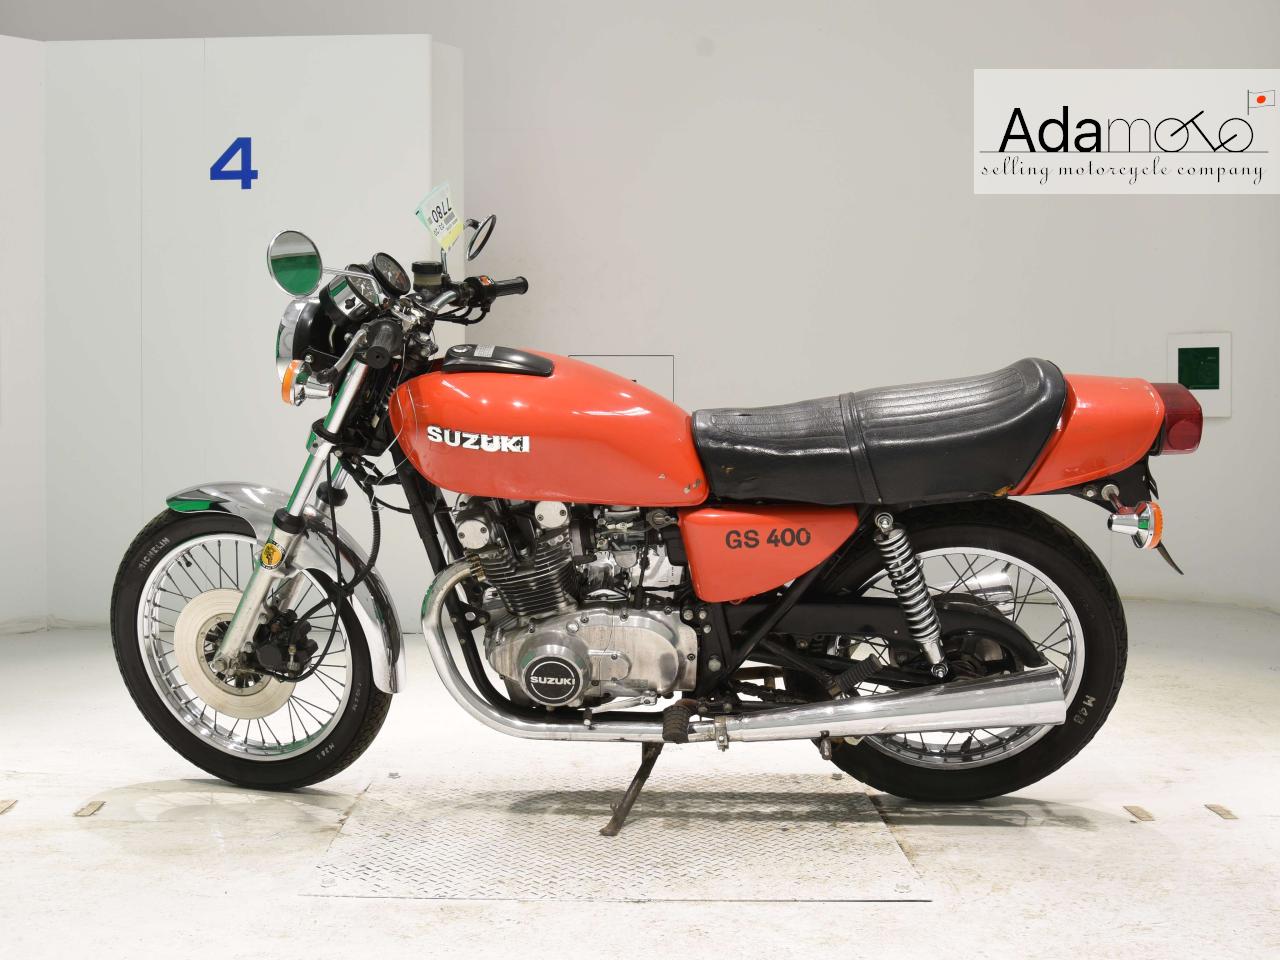 Suzuki GS400 - Adamoto - Motorcycles from Japan